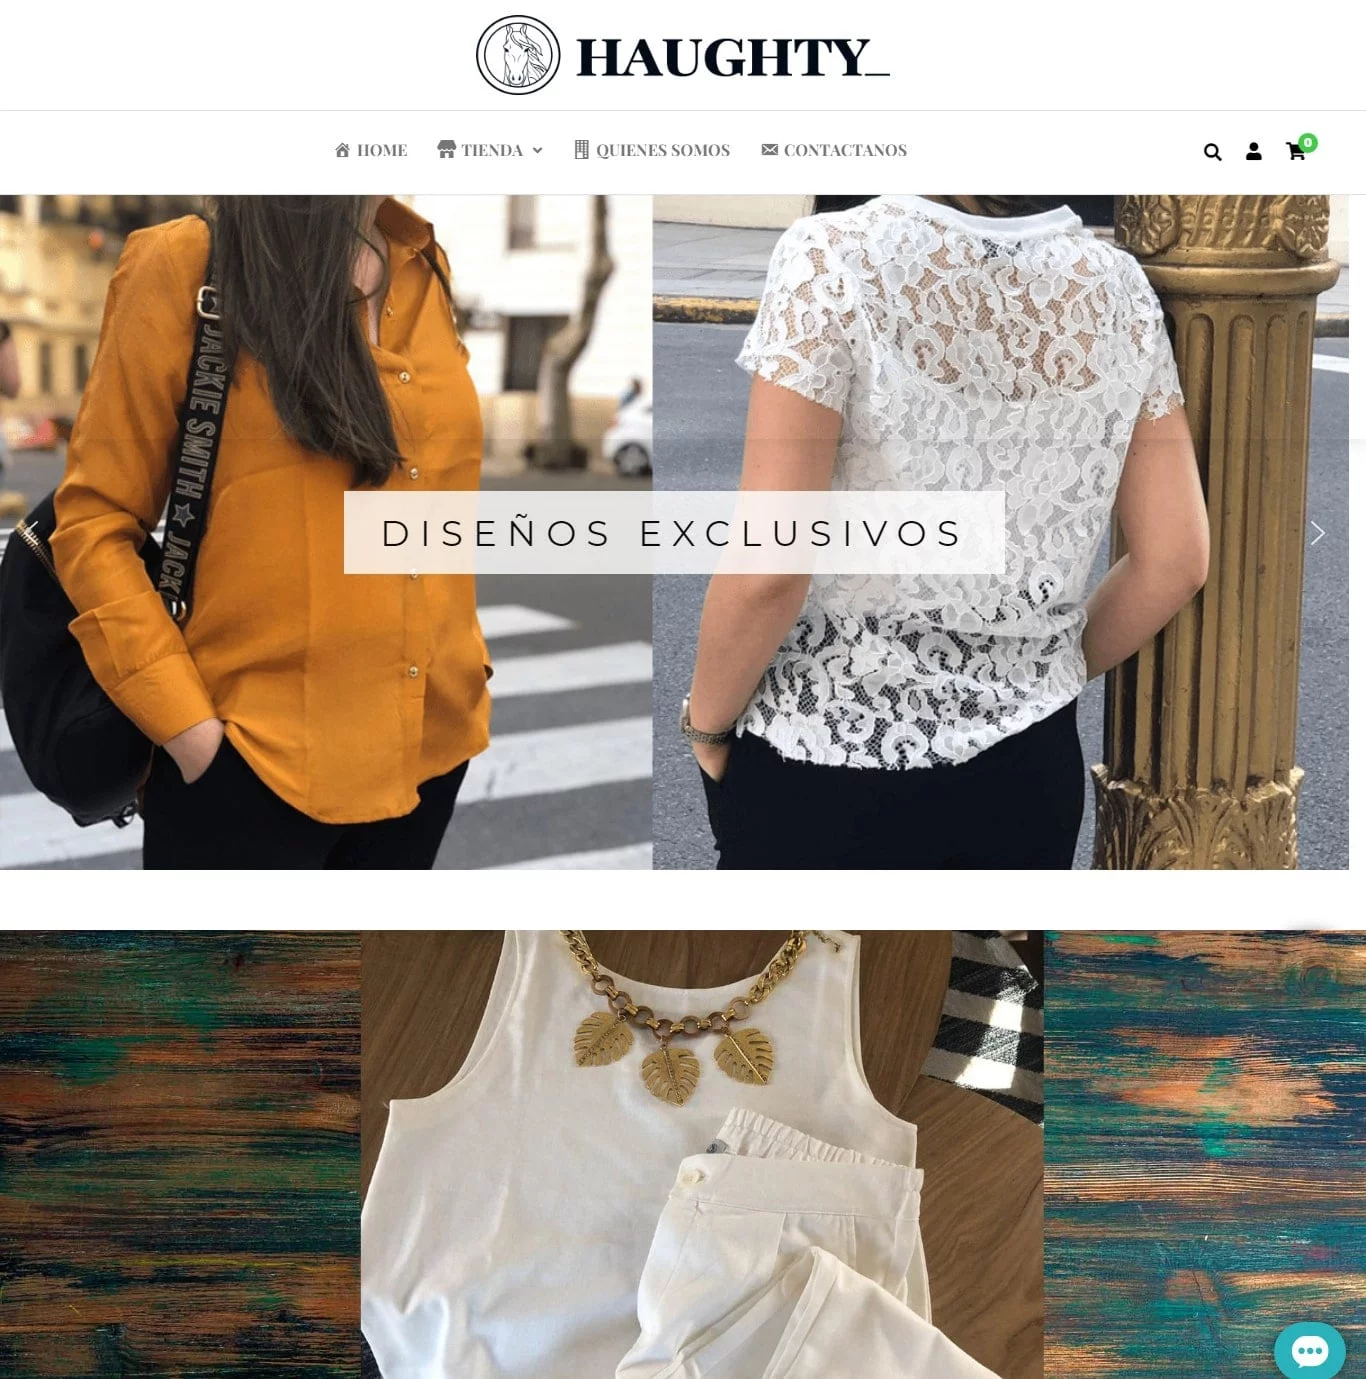 haughty.com.ar